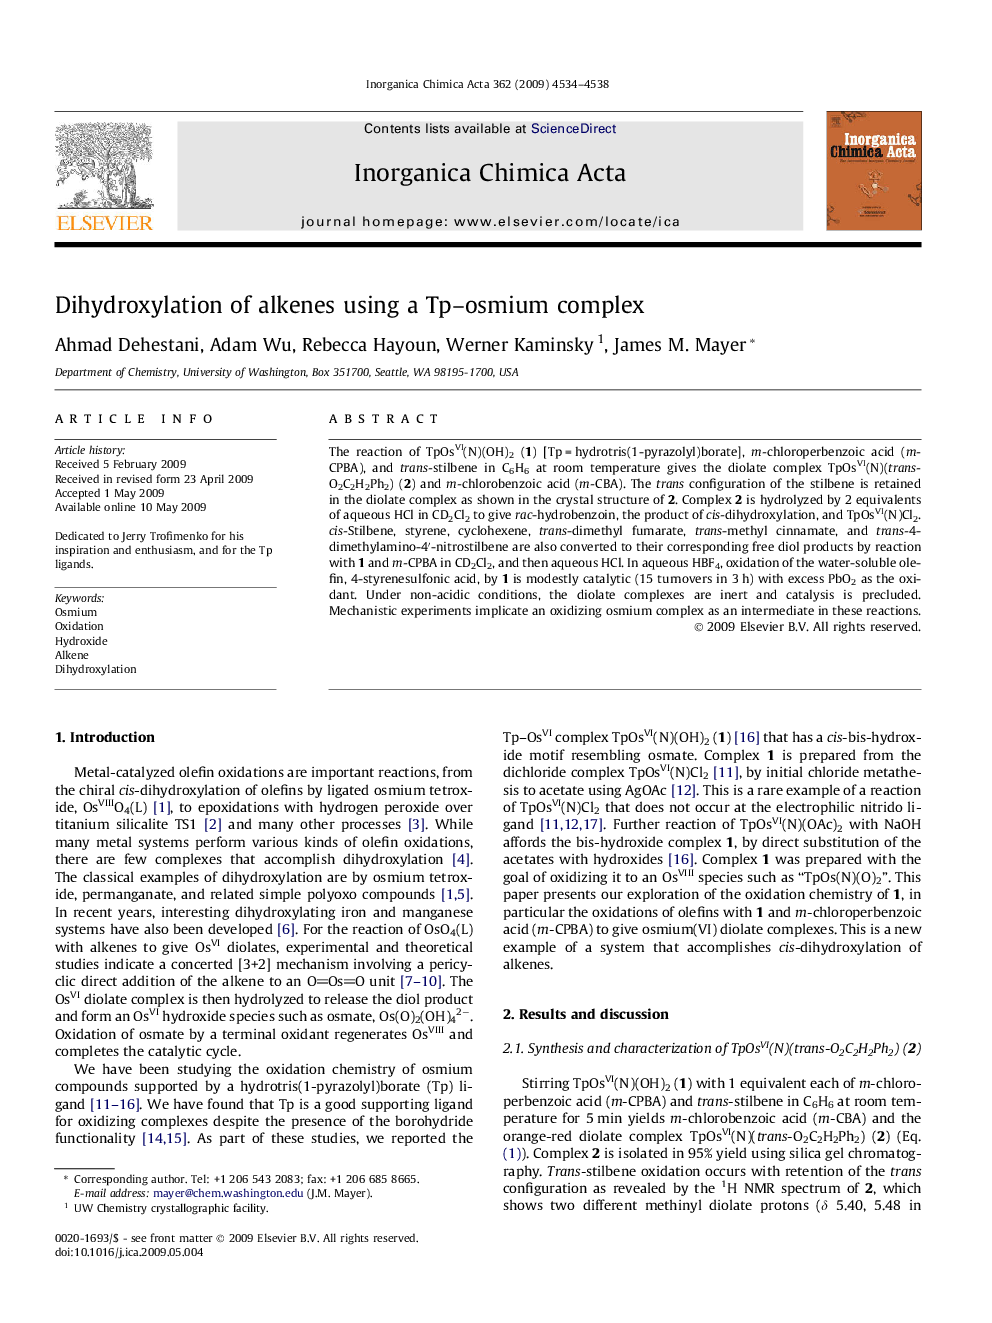 Dihydroxylation of alkenes using a Tp–osmium complex